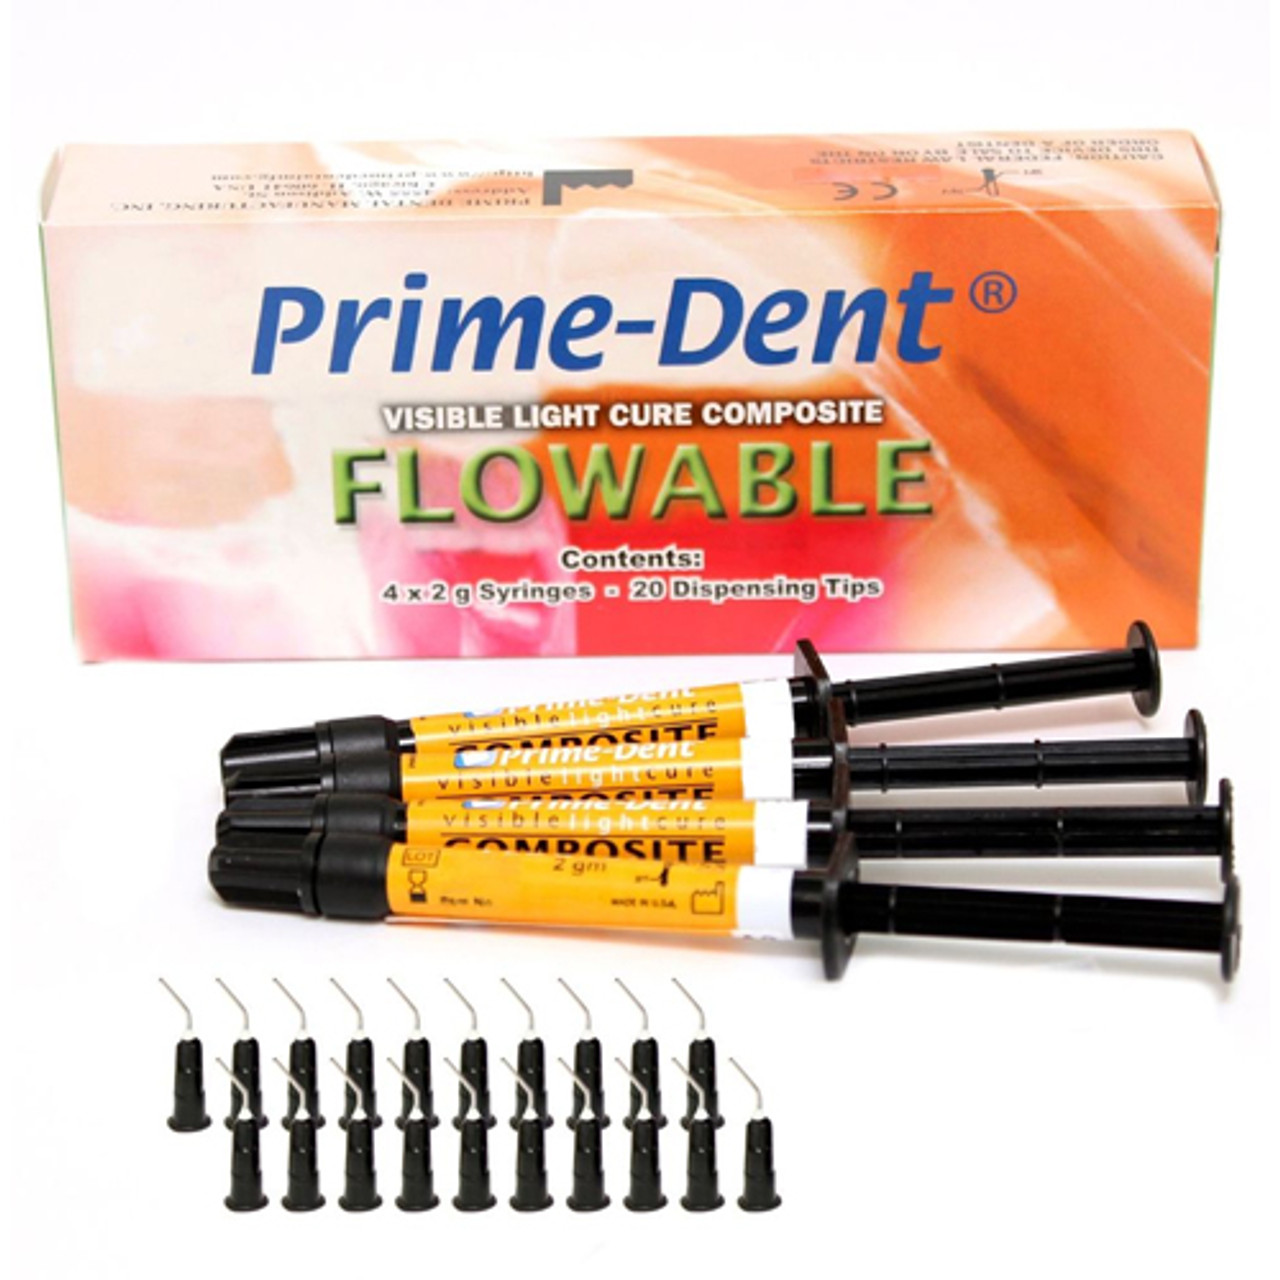 Prime-Dent Flowable Composite C2 - 4 Syringe Kit. VLC (Visible Light Cure)